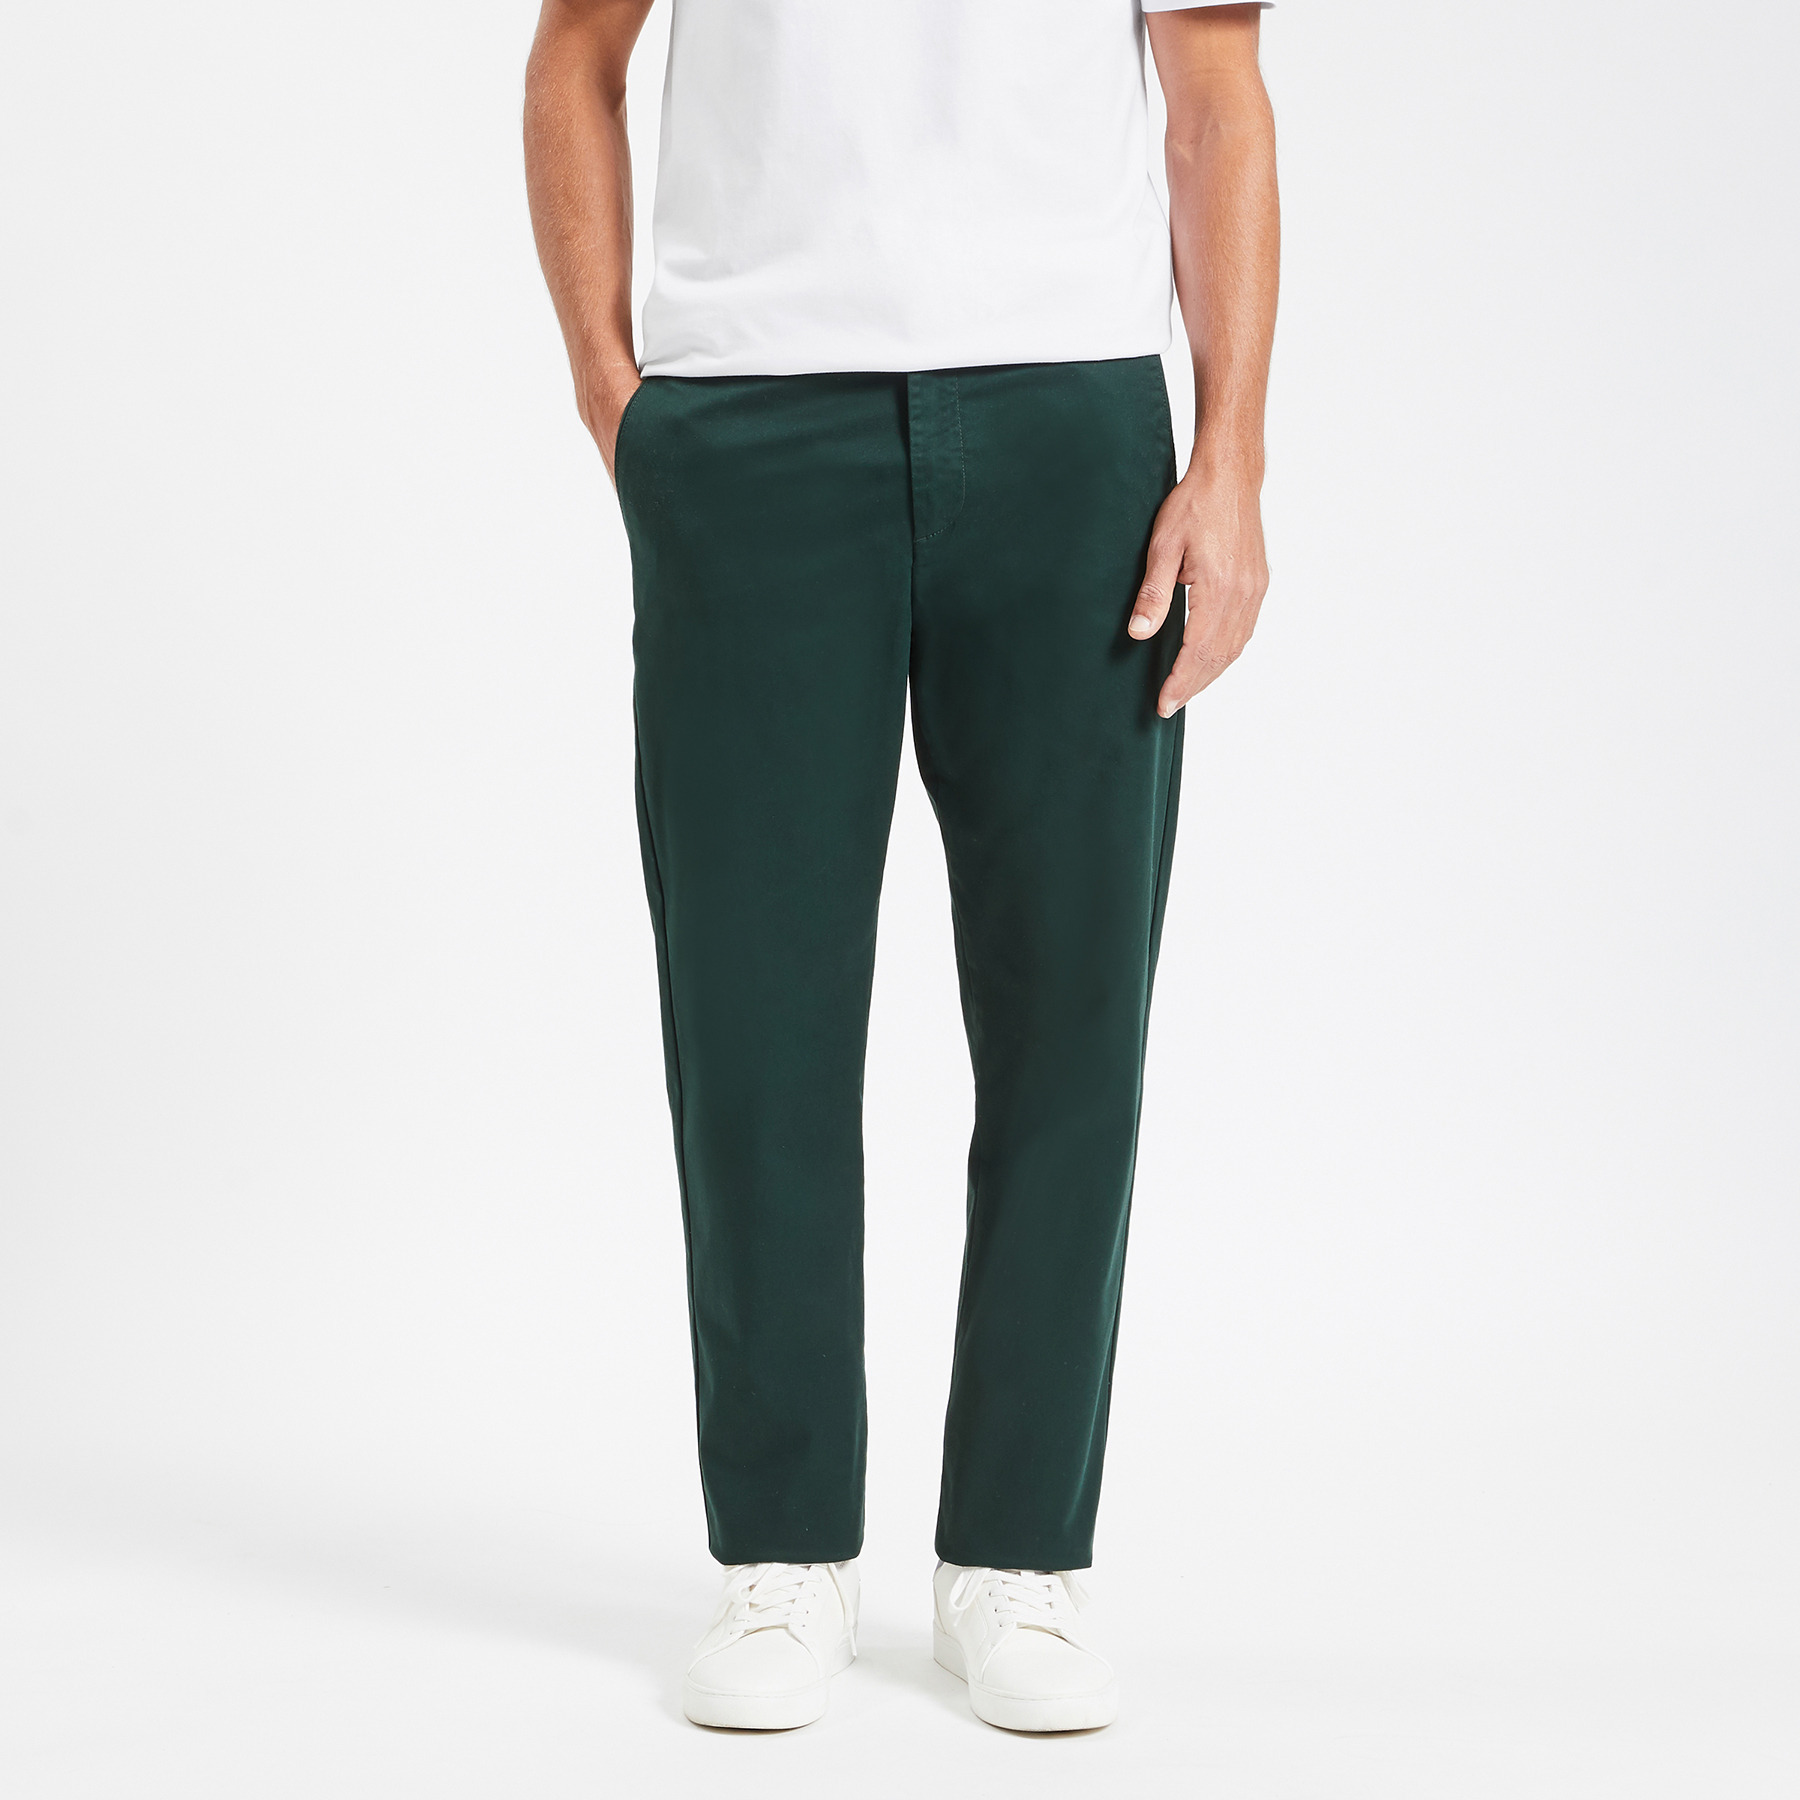 Pantalon chino regular "le parfait by JULES" Vert 46 98% Coton, 2% Elasthanne Homme Brice